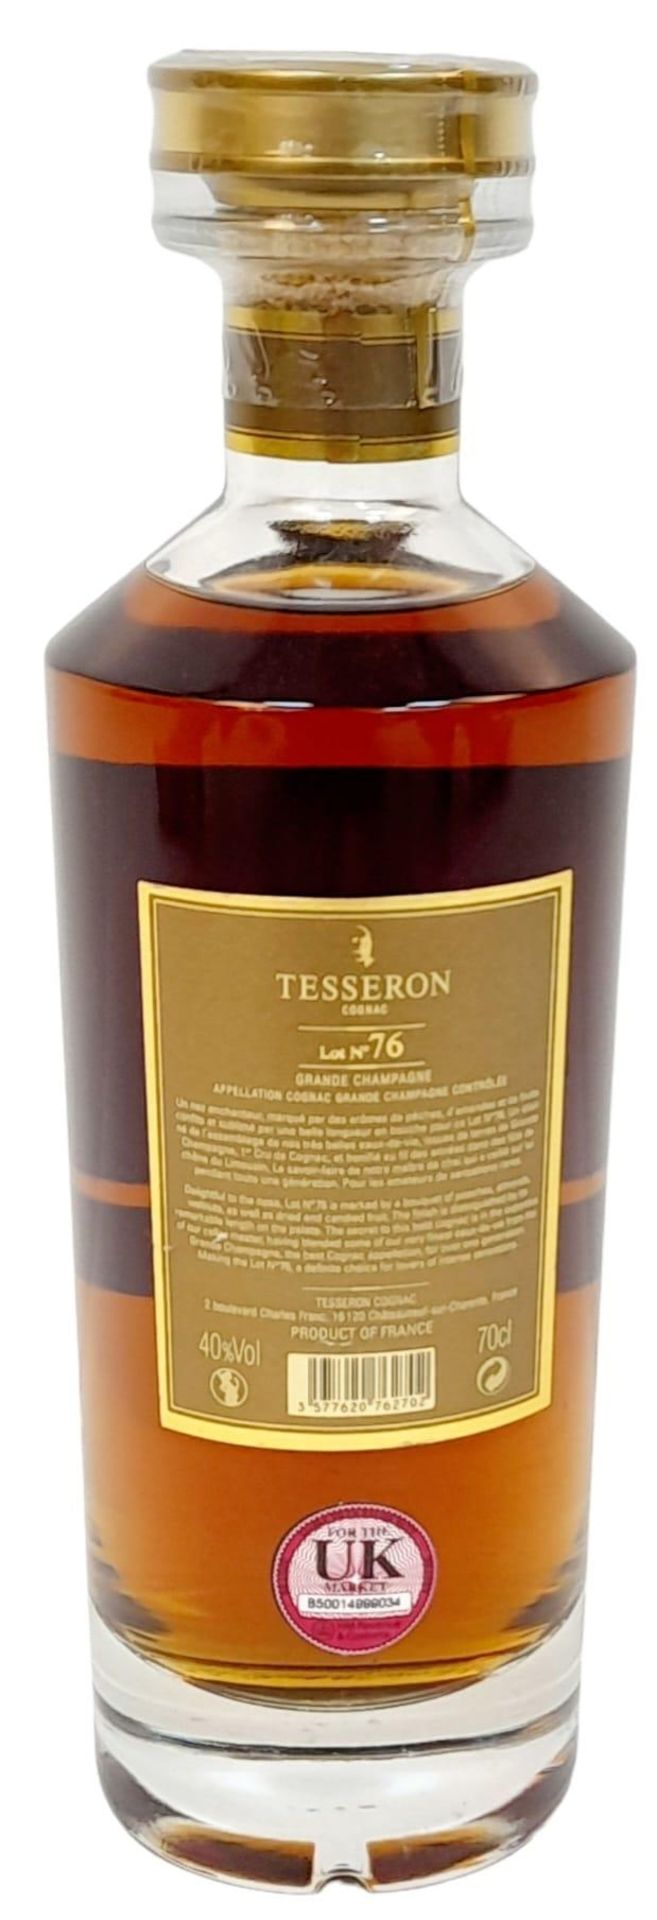 An Unopened, Sealed, Limited Edition Tesseron Cognac Lot No 76 1st Cru de Cognac XO Tradition. - Image 3 of 5